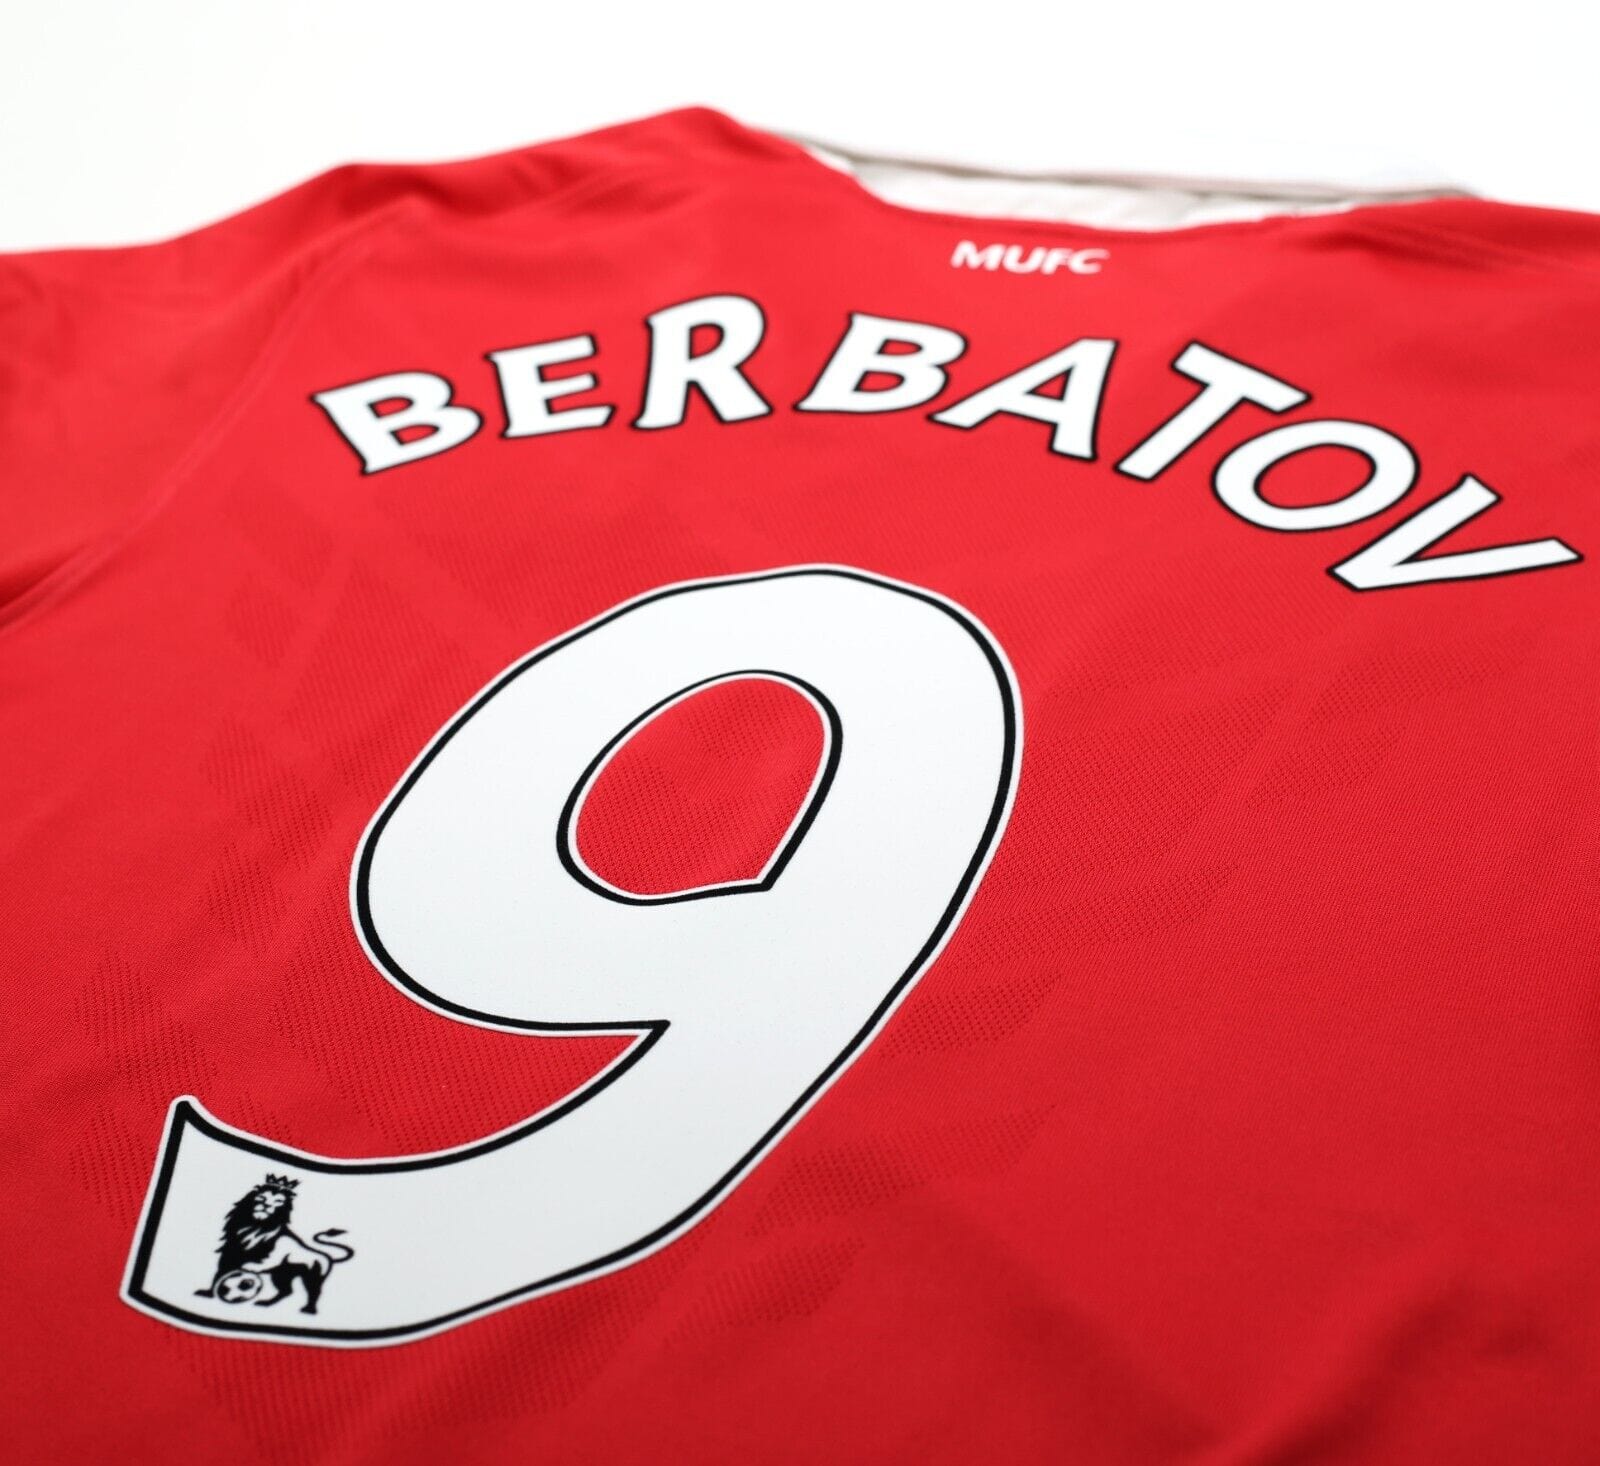 2010/11 BERBATOV #9 Manchester United Vintage Nike Home Football Shirt (S)